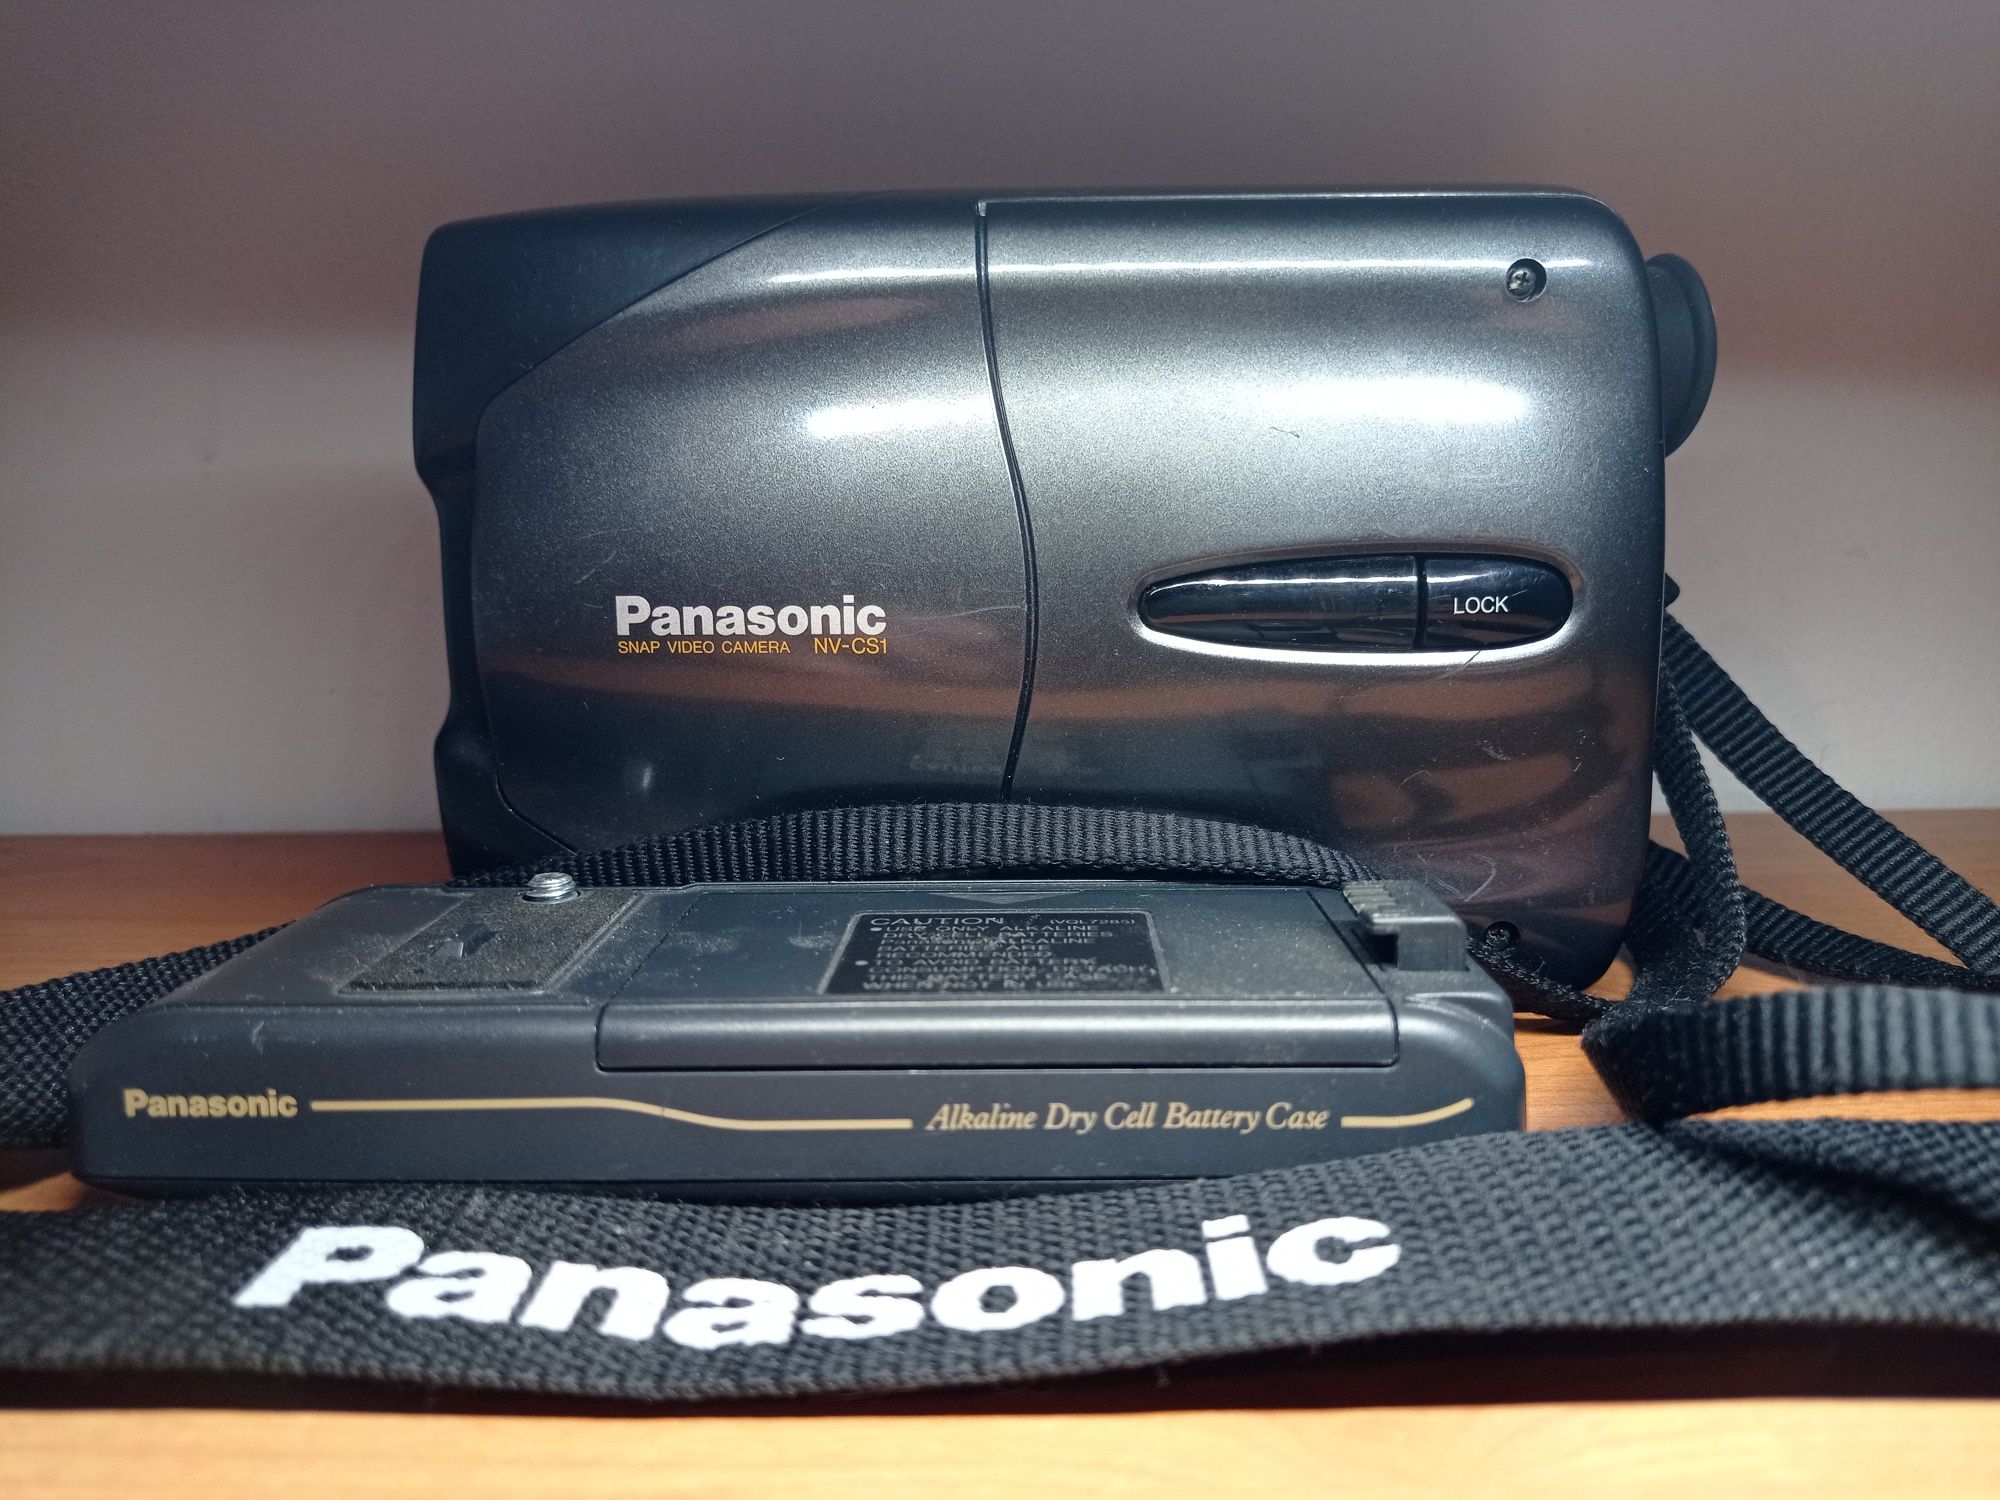 Panasonic nv-cs1 Snap Video Camera WILDE ANGLE Japan